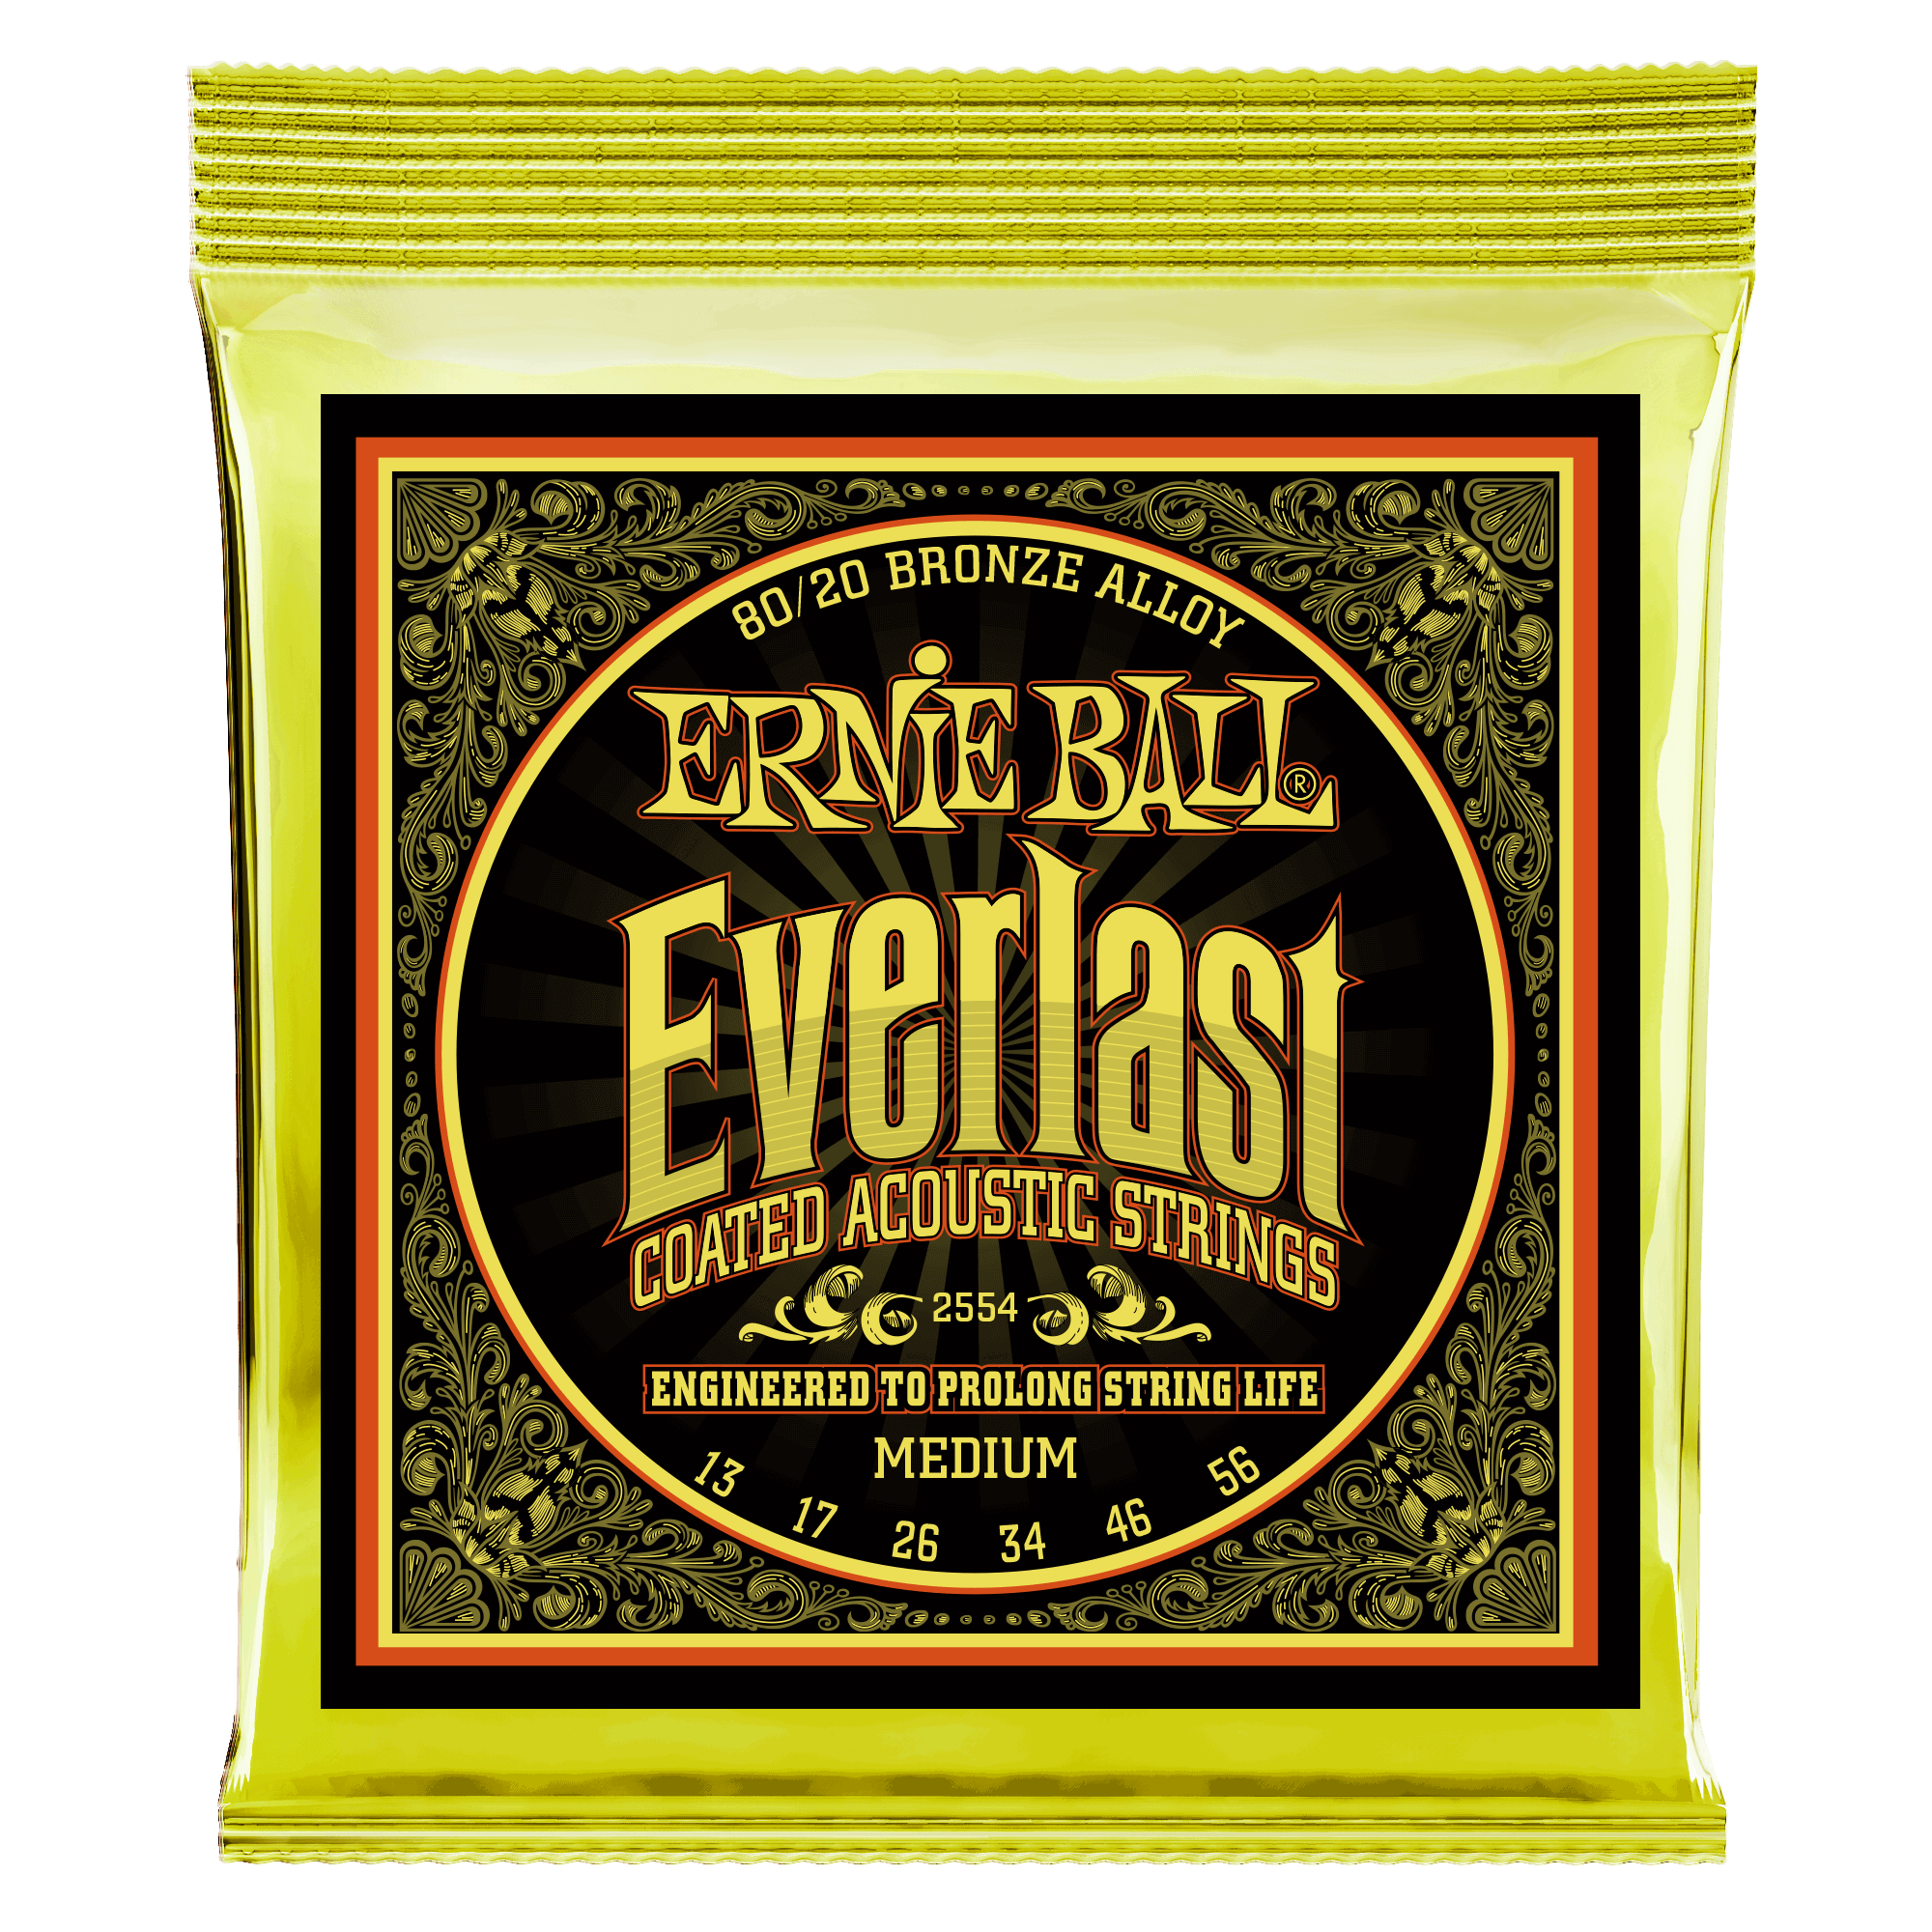 Ernie Ball, 2554, Everlast Acoustic 80/20 Bronze Medium, Guitar Strings